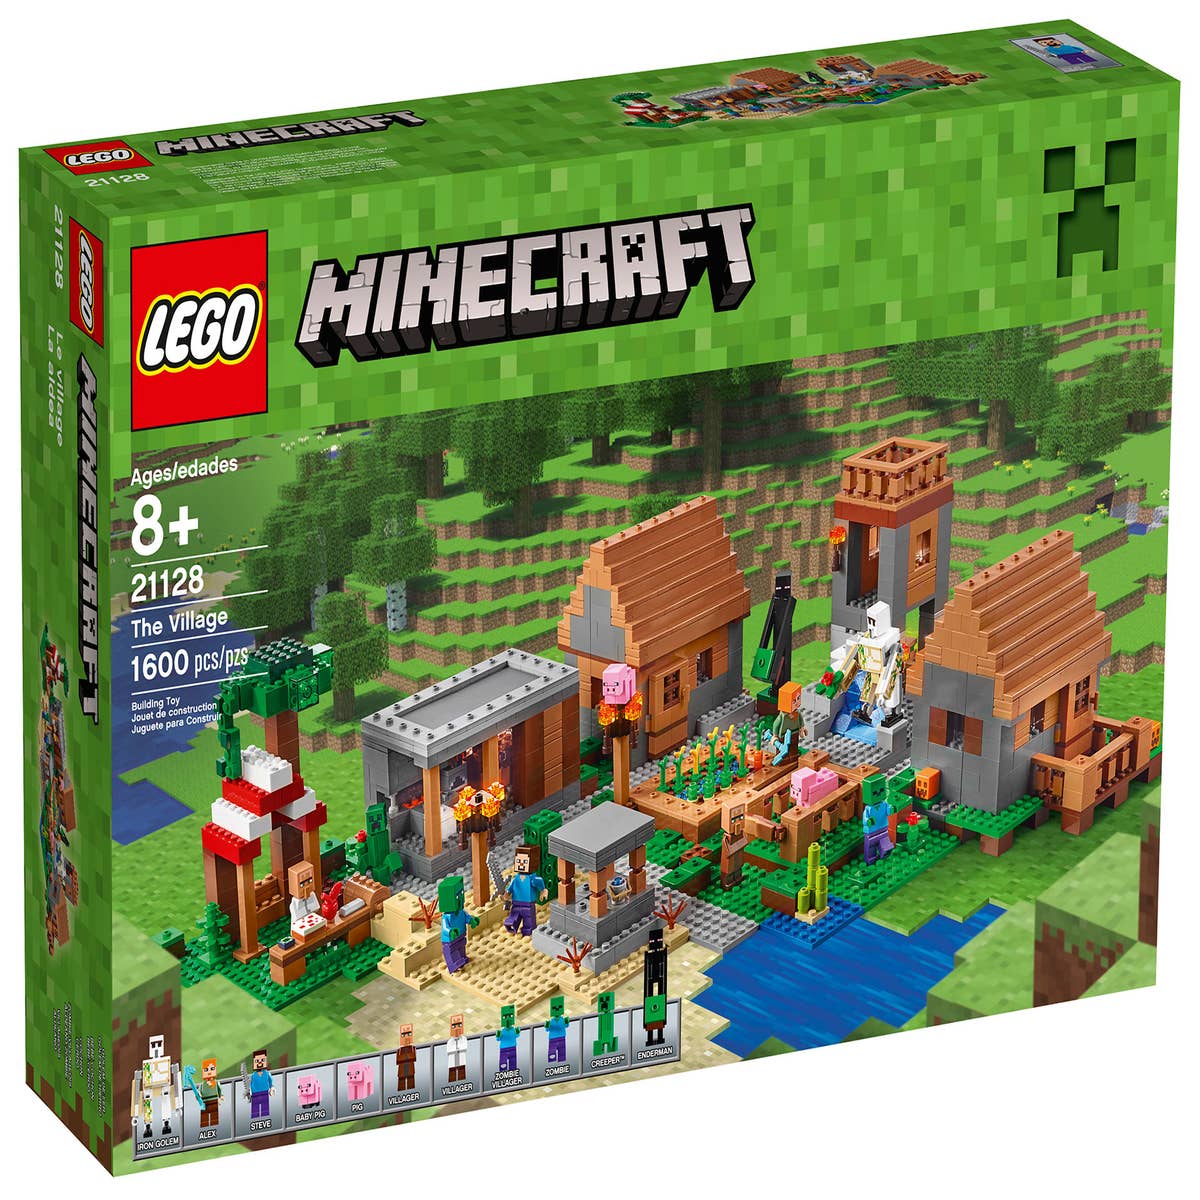 A closer look at Lego's new £170 Minecraft set